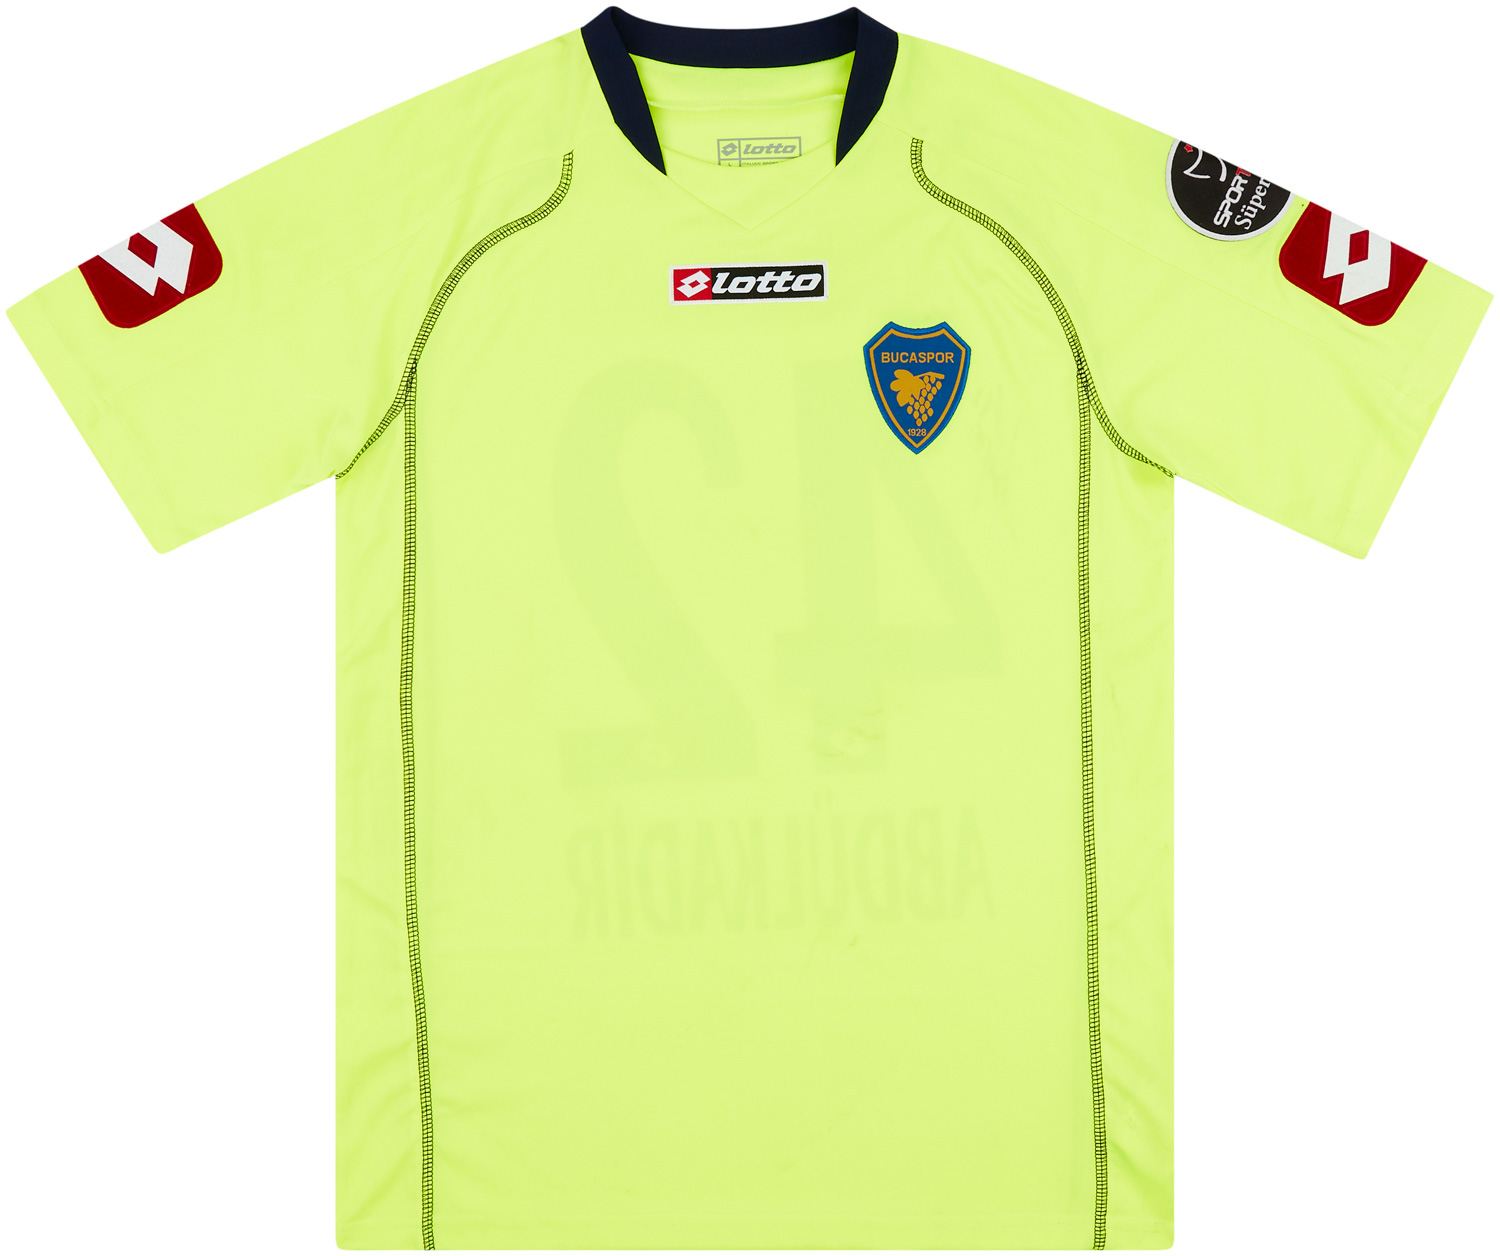 2010-11 Bucaspor Match Issue Signed Third Shirt Abdülkadir #42